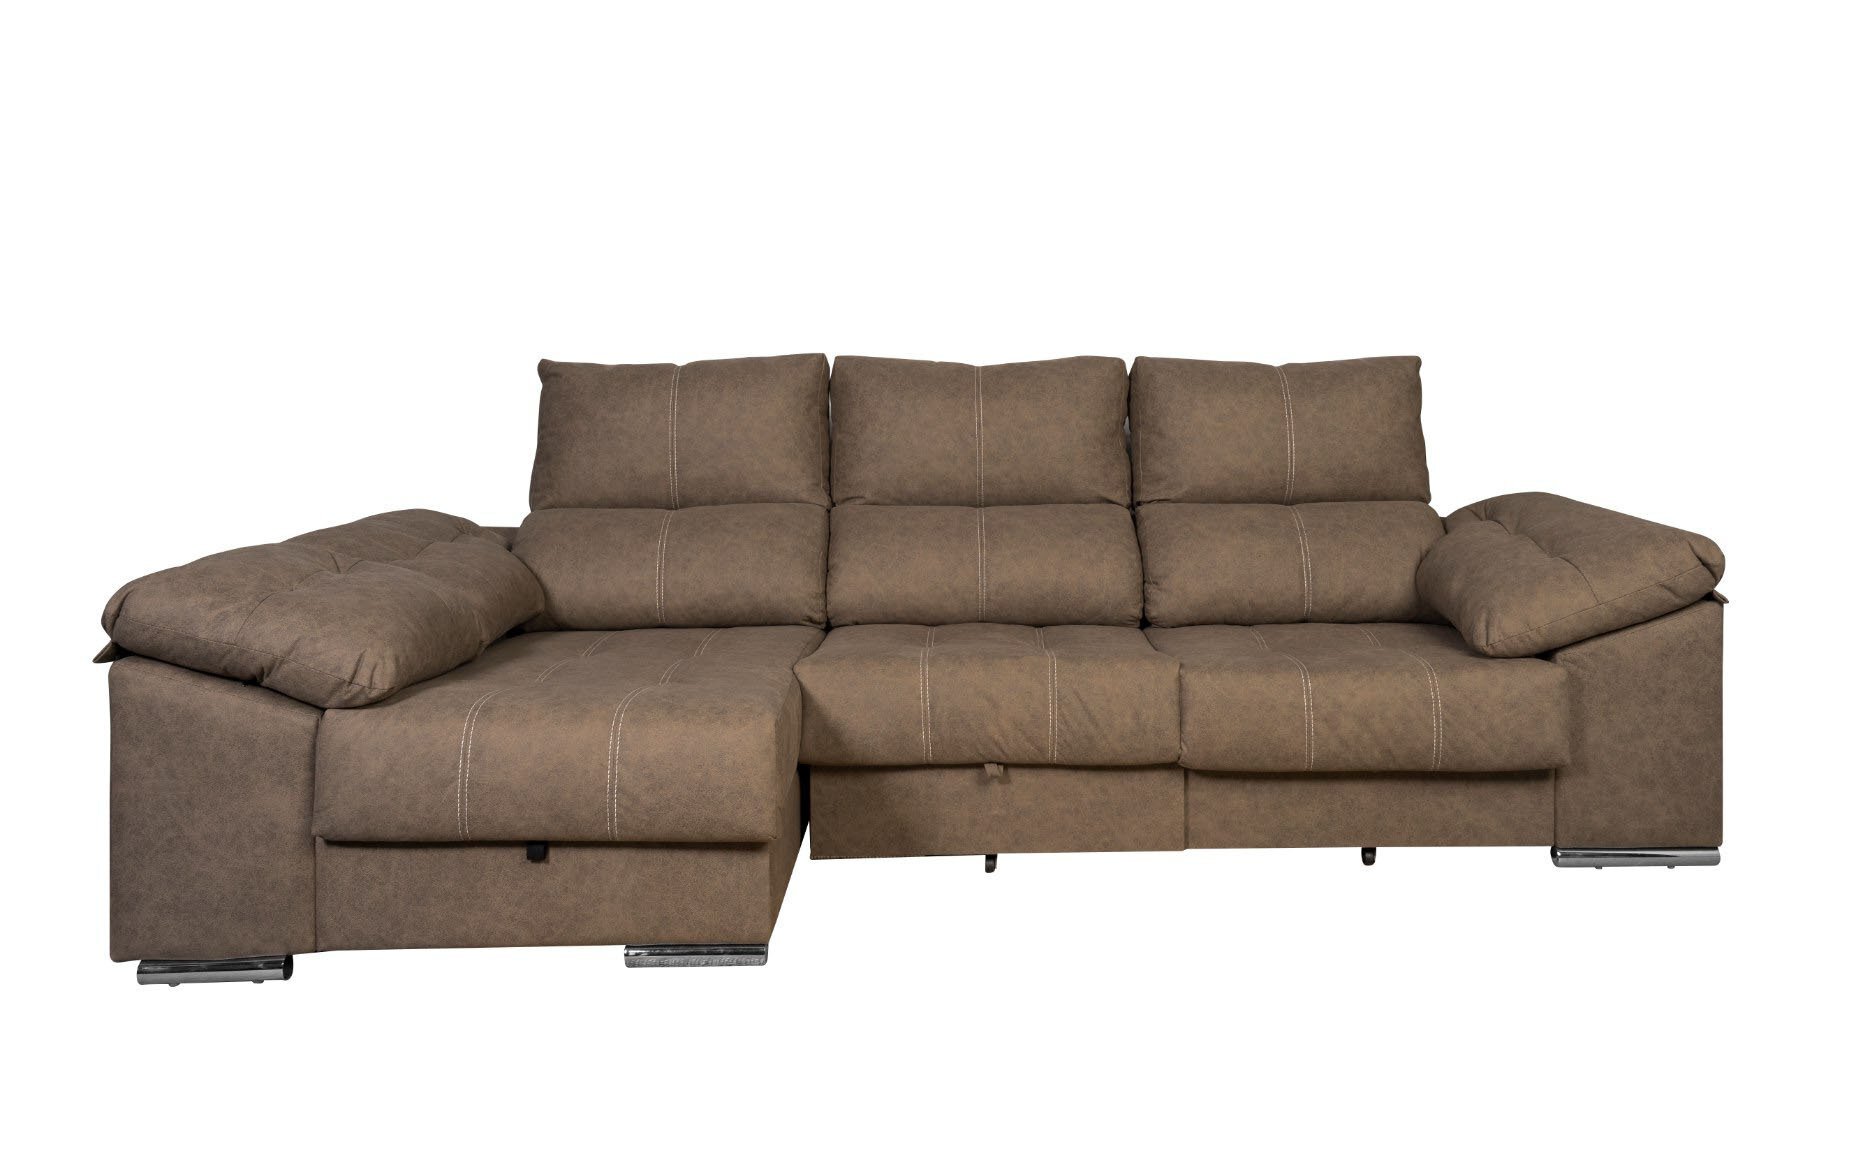 Sofa Cama Chaise Longue 275x140cm. Reclinable, con Arcon +2 pufs